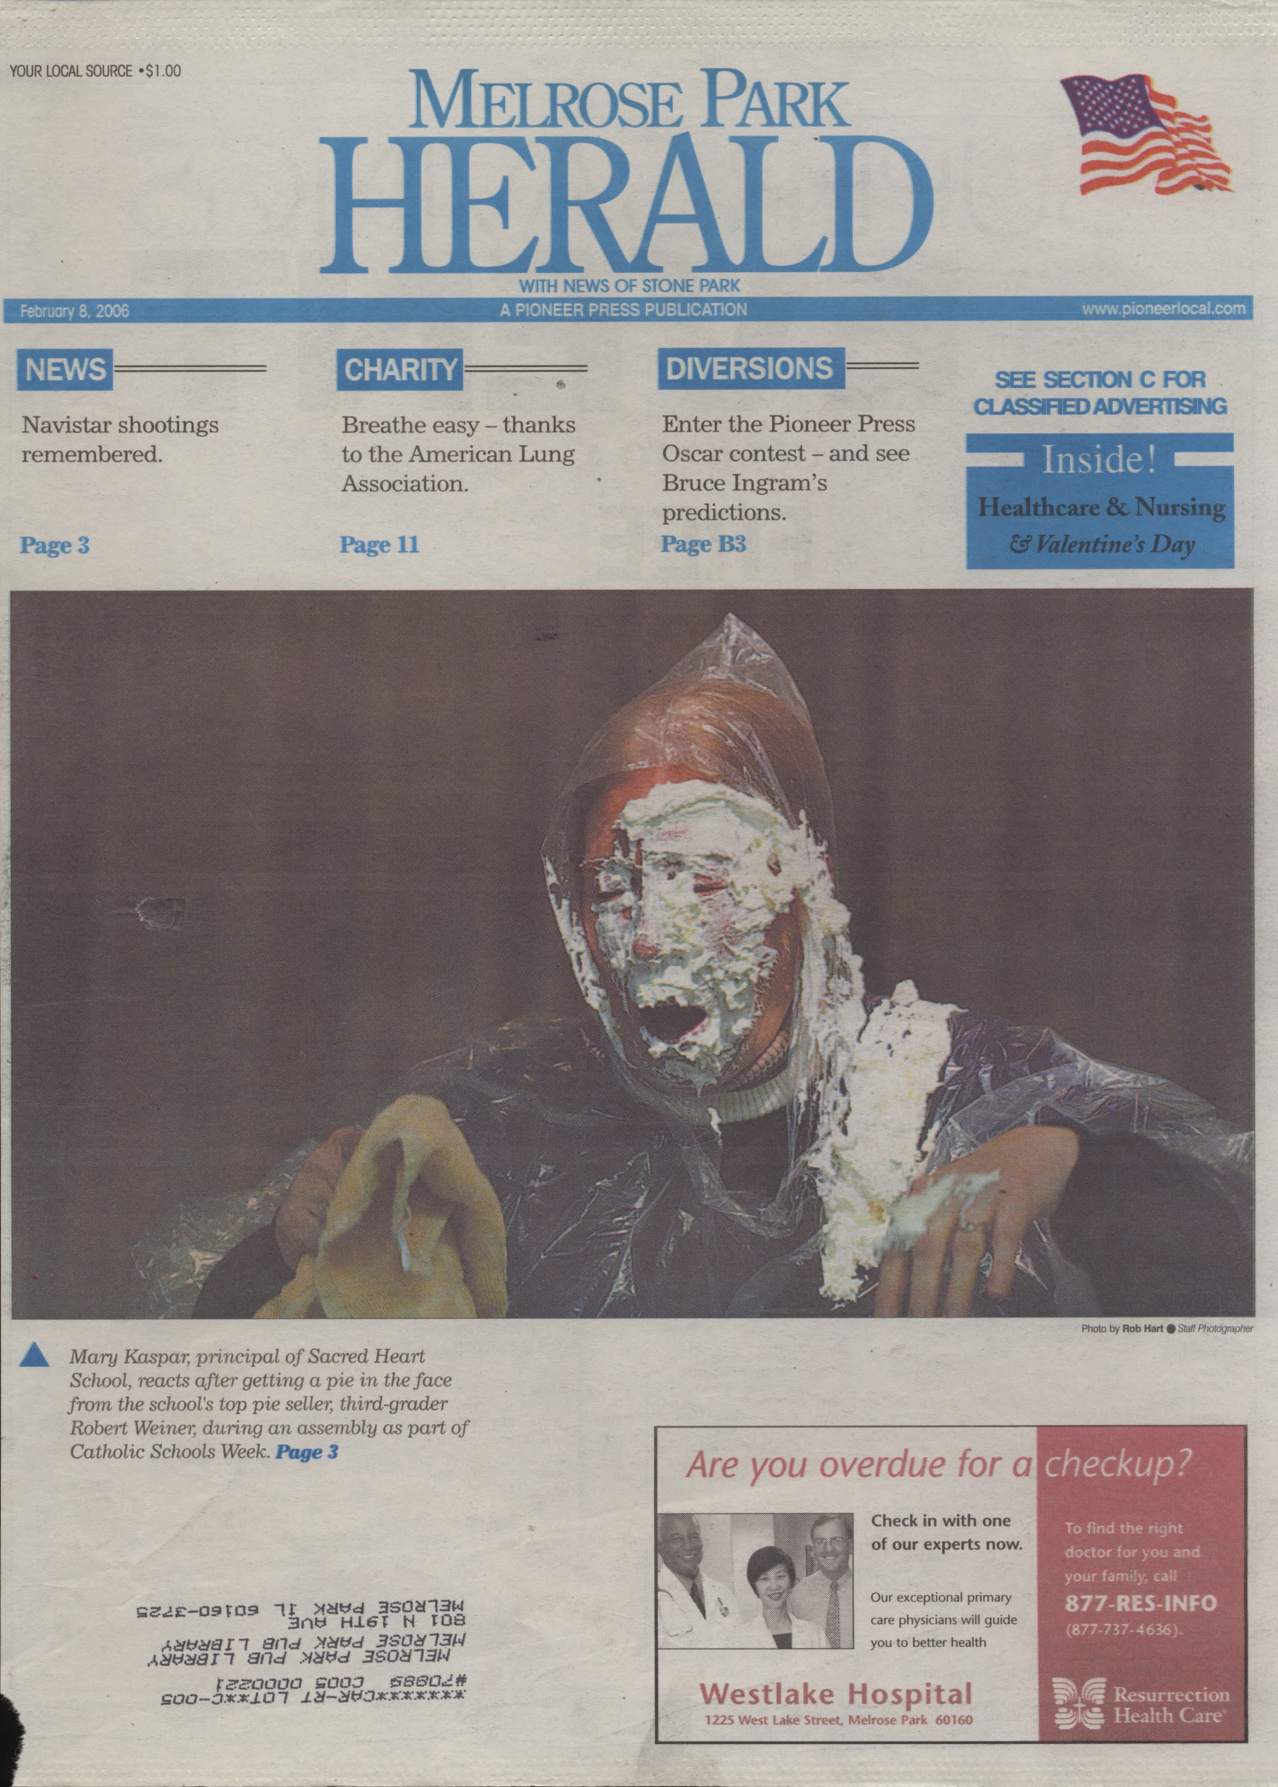 The Herald – 20060208